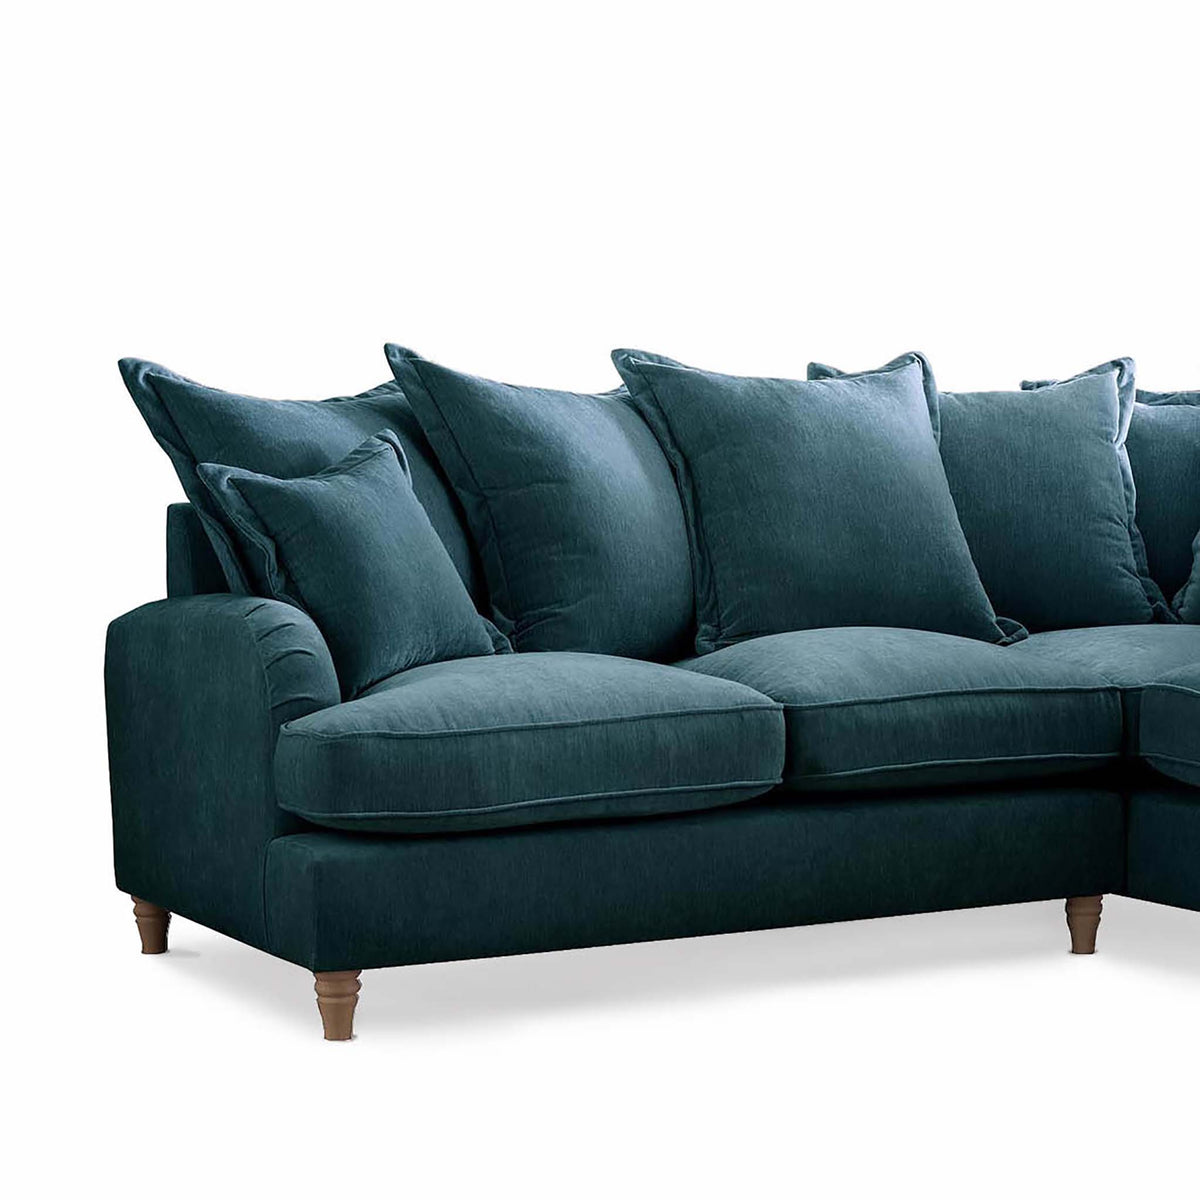 Rupert Emerald Green 2 Corner 1 Right Hand Sofa Couch